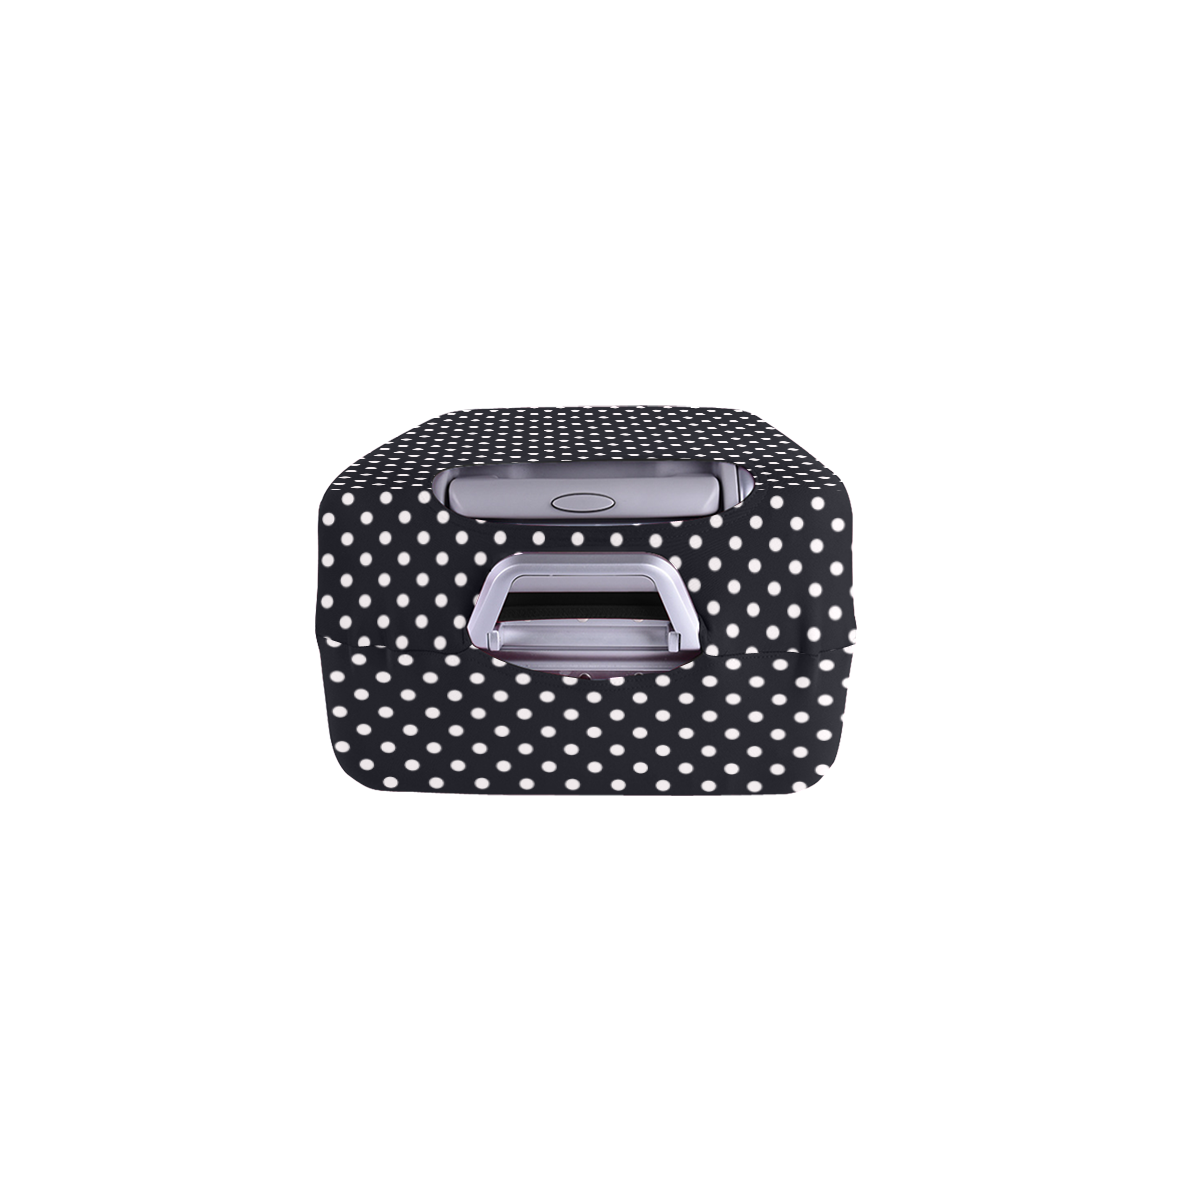 Black polka dots Luggage Cover/Small 18"-21"